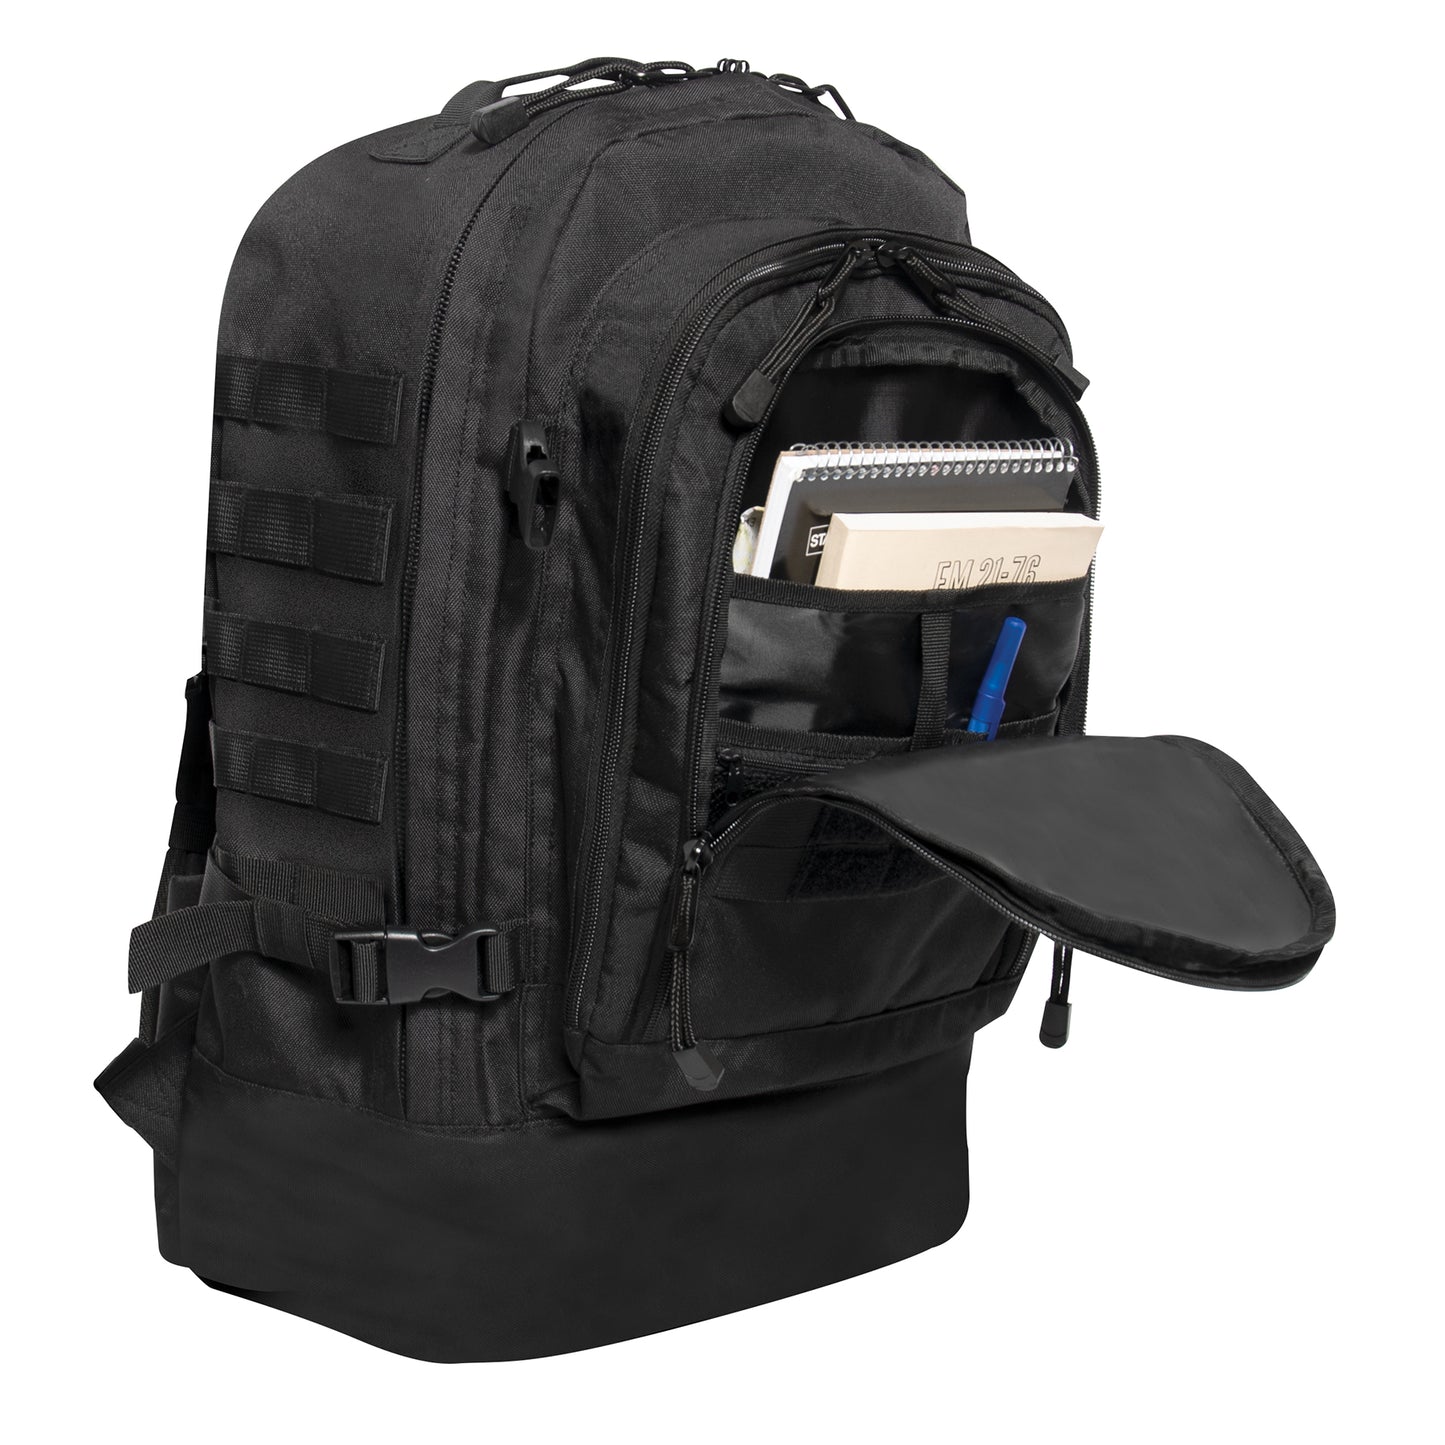 Rothco Skirmish 3 Day Assault Backpack